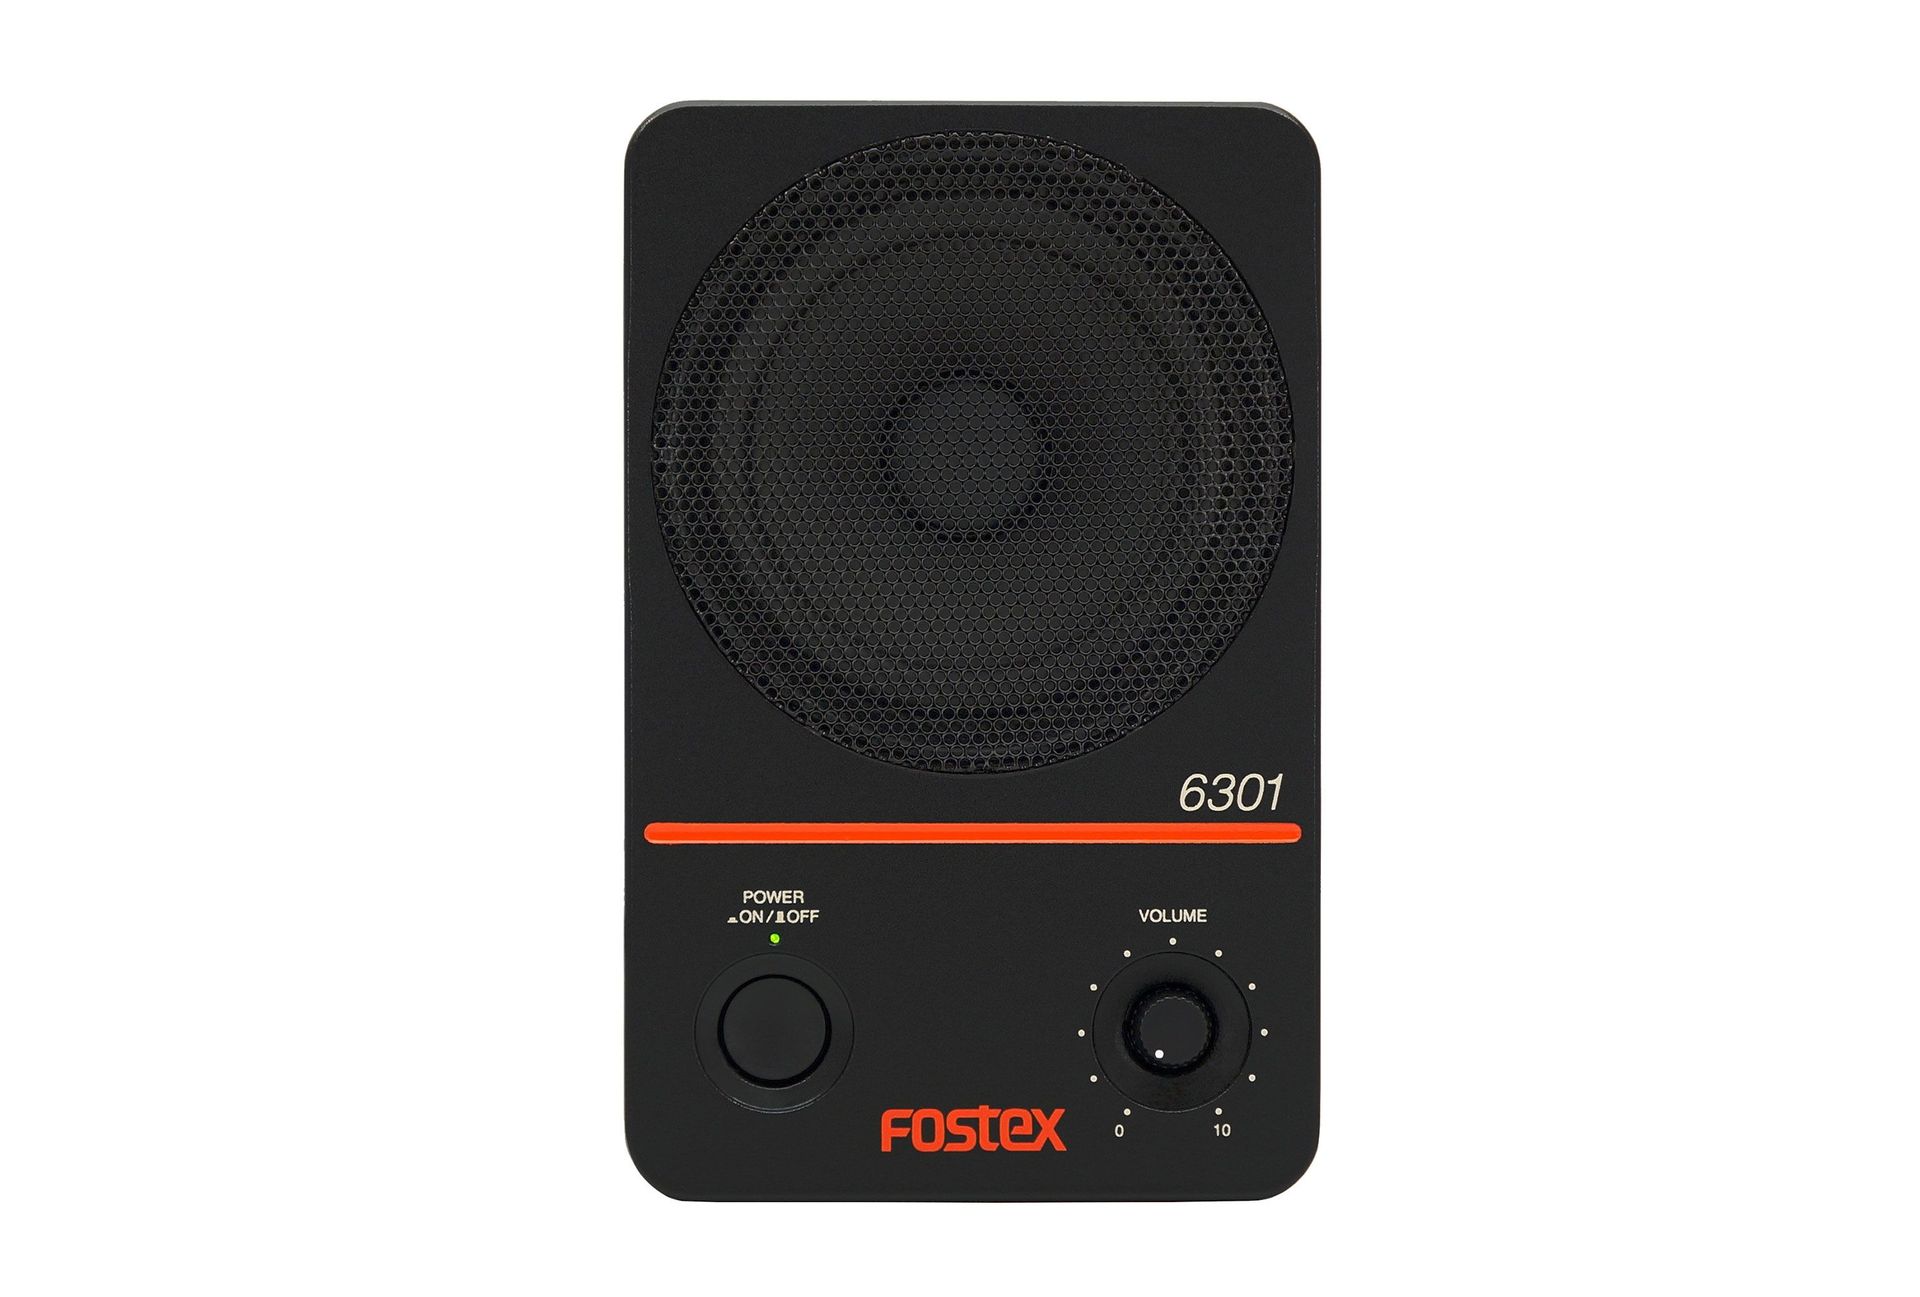 Fostex 6301NX Aktiver Monitor für Projektstudios und Multimedia 